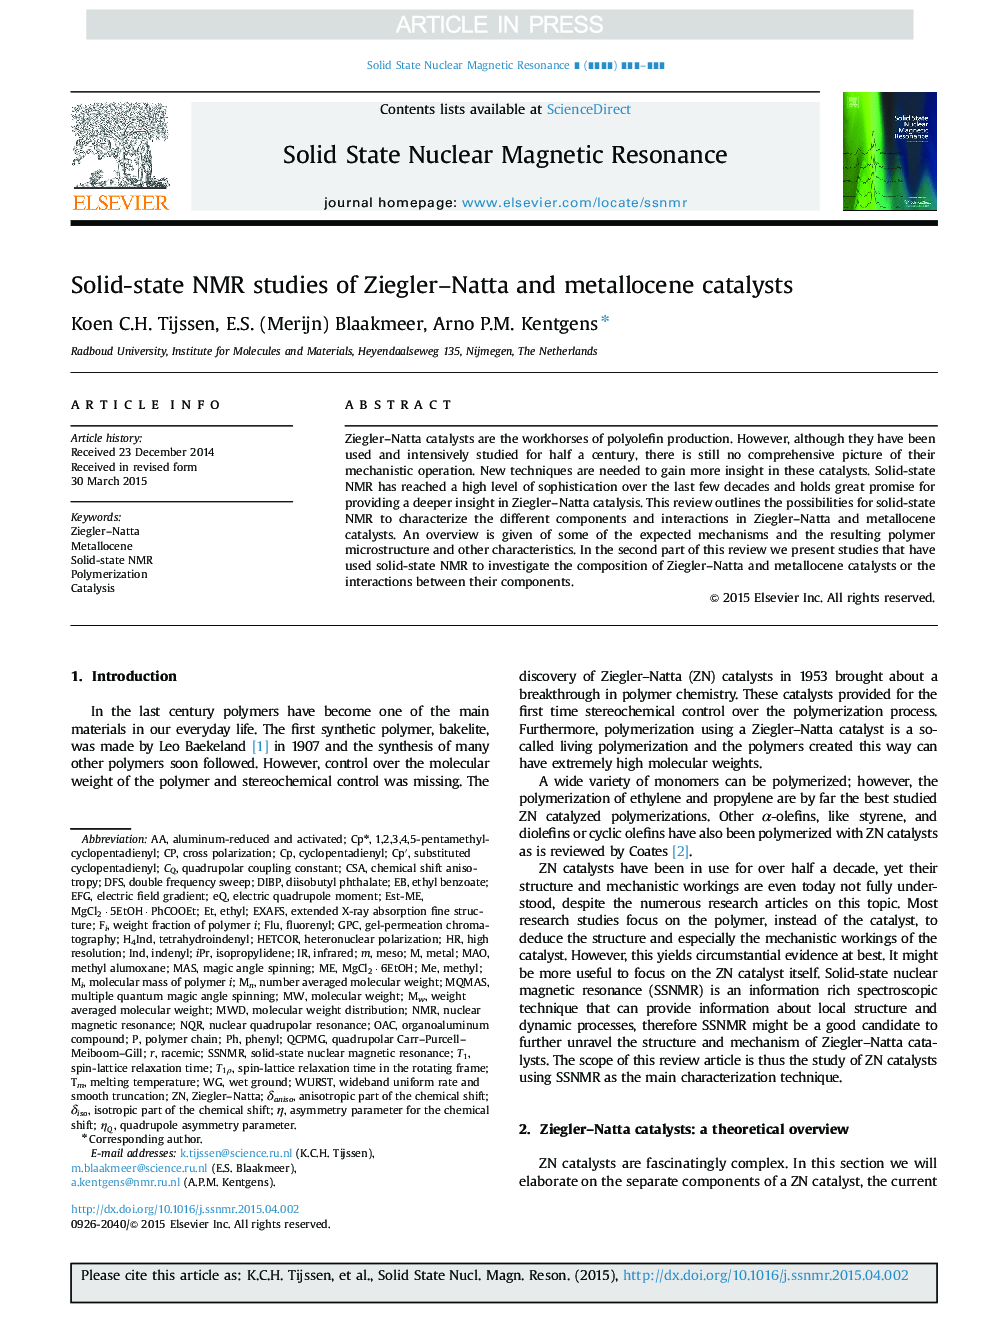 Solid-state NMR studies of Ziegler-Natta and metallocene catalysts